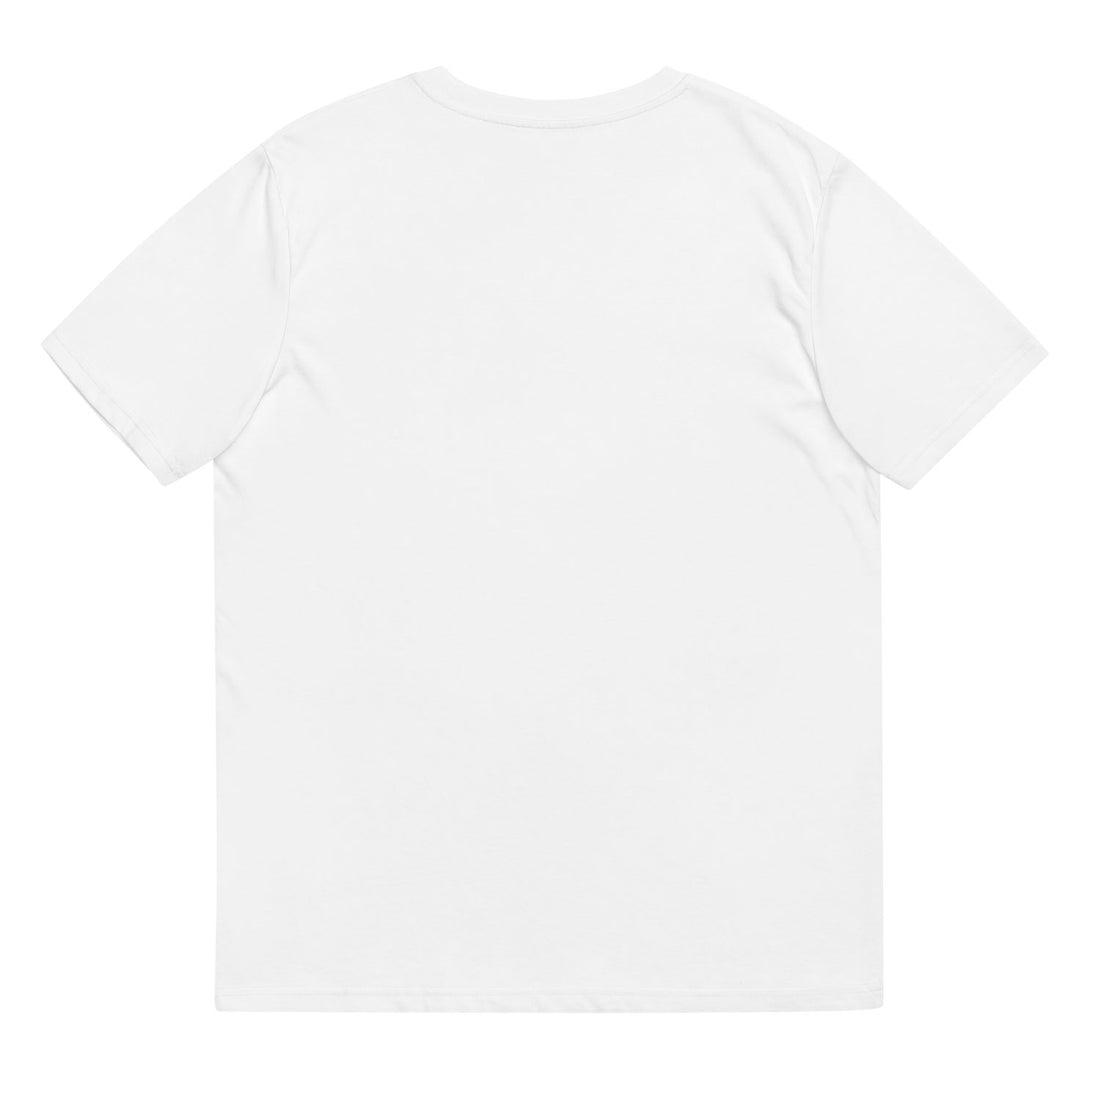 dogecoin logo tshirt white